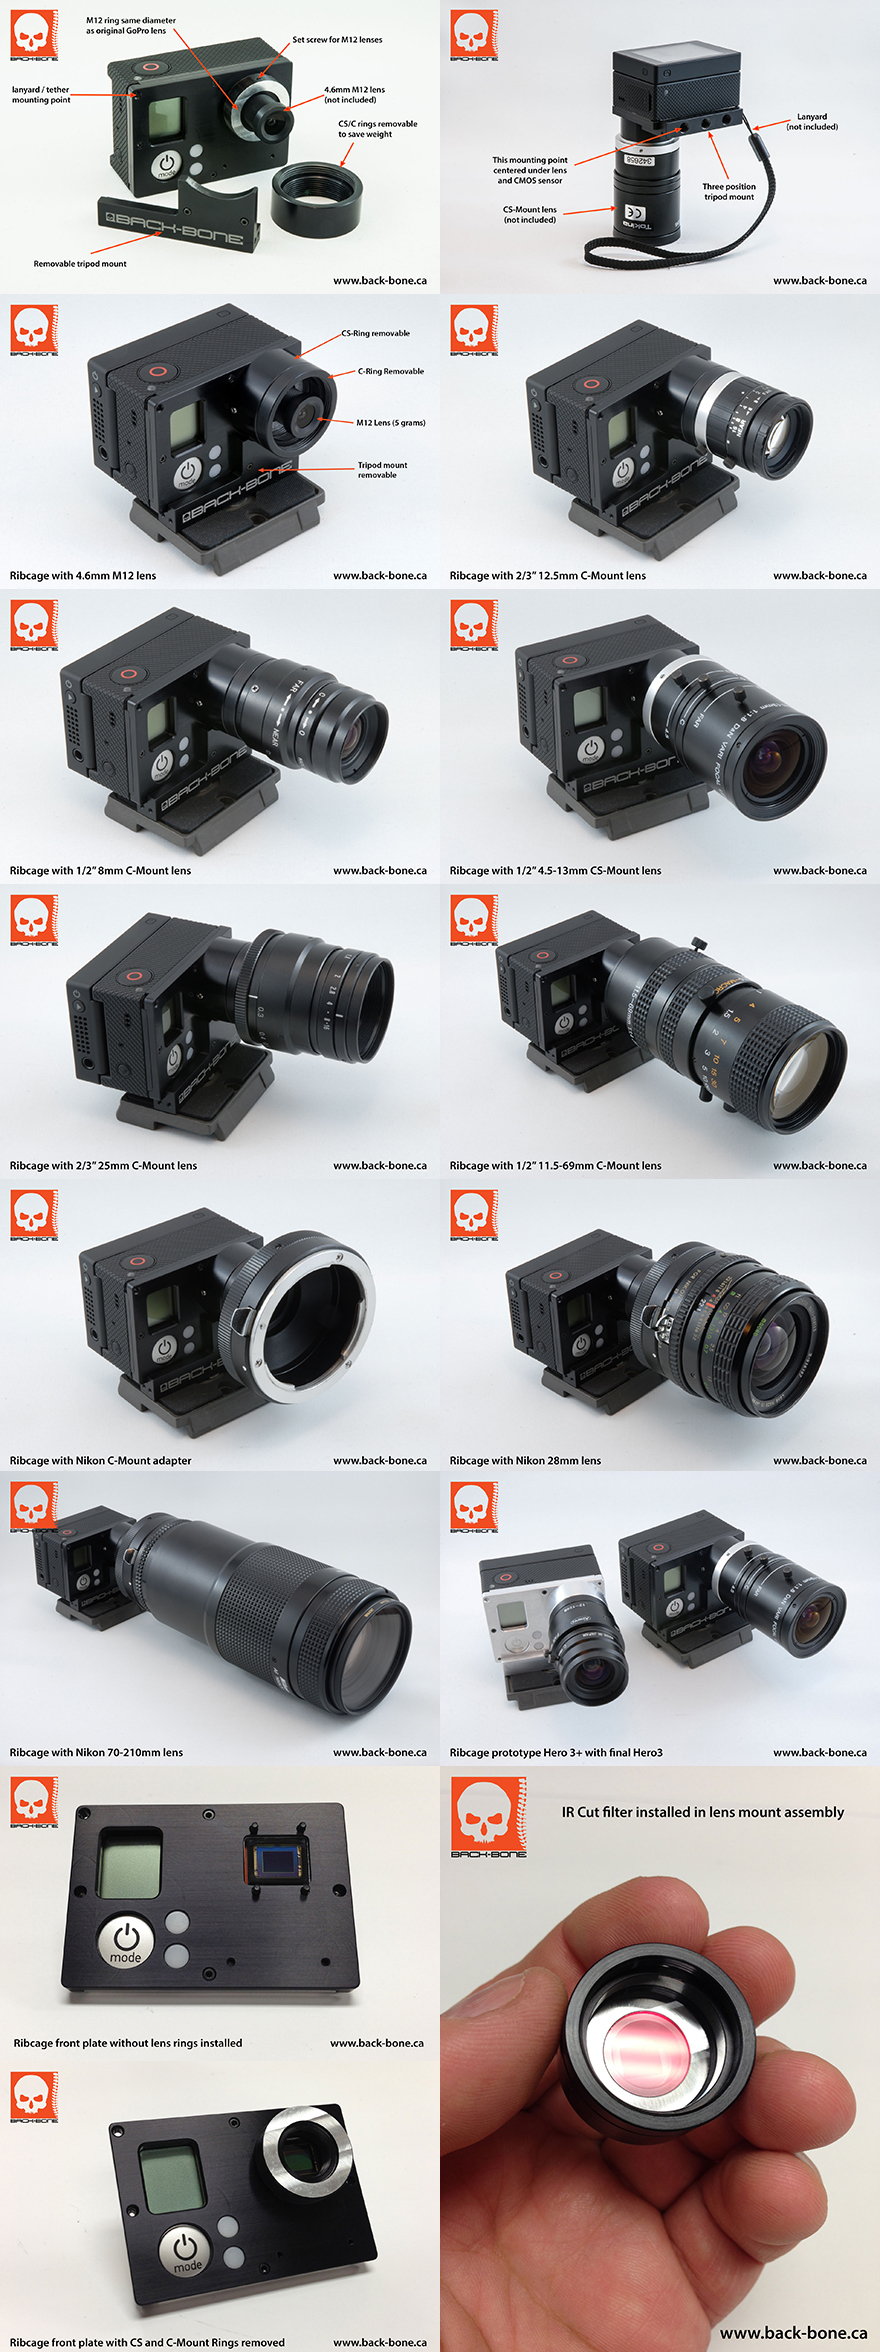 Превращение экшен камеры GoPro 3 в фото и видеокамеру с c mount объективами